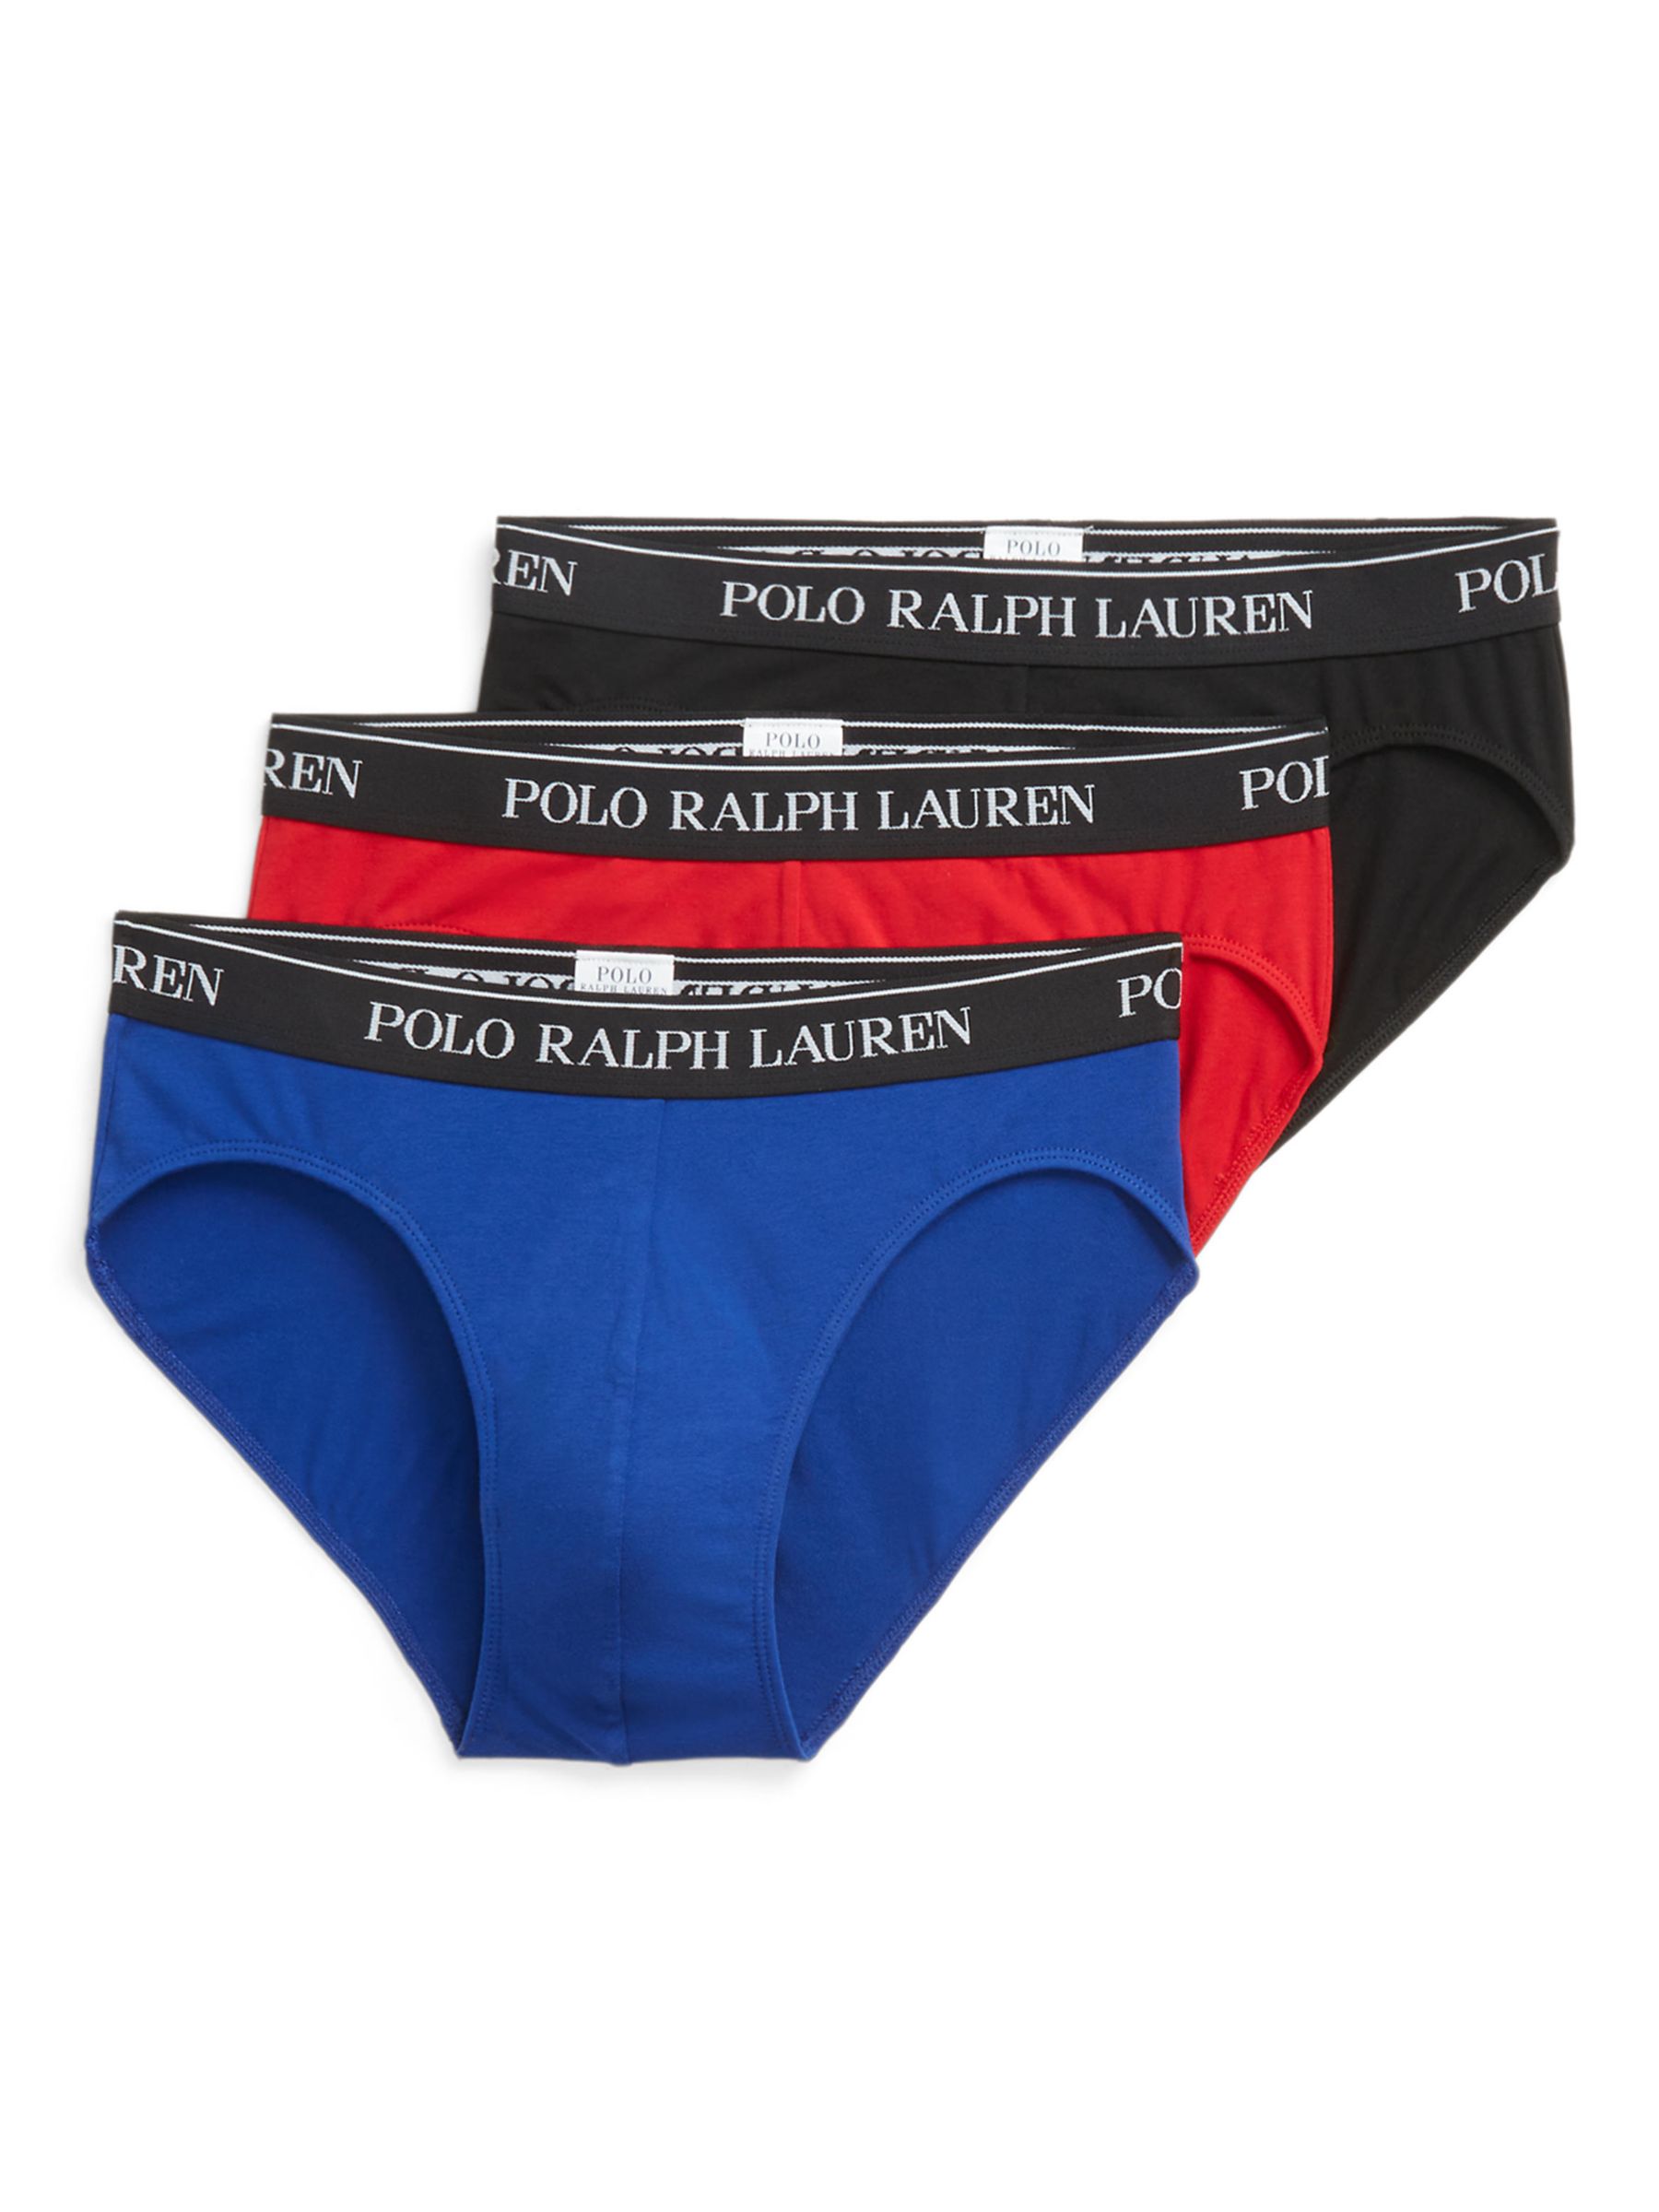 Ralph Lauren Stretch Cotton Briefs, Pack of 3, Multi, XL